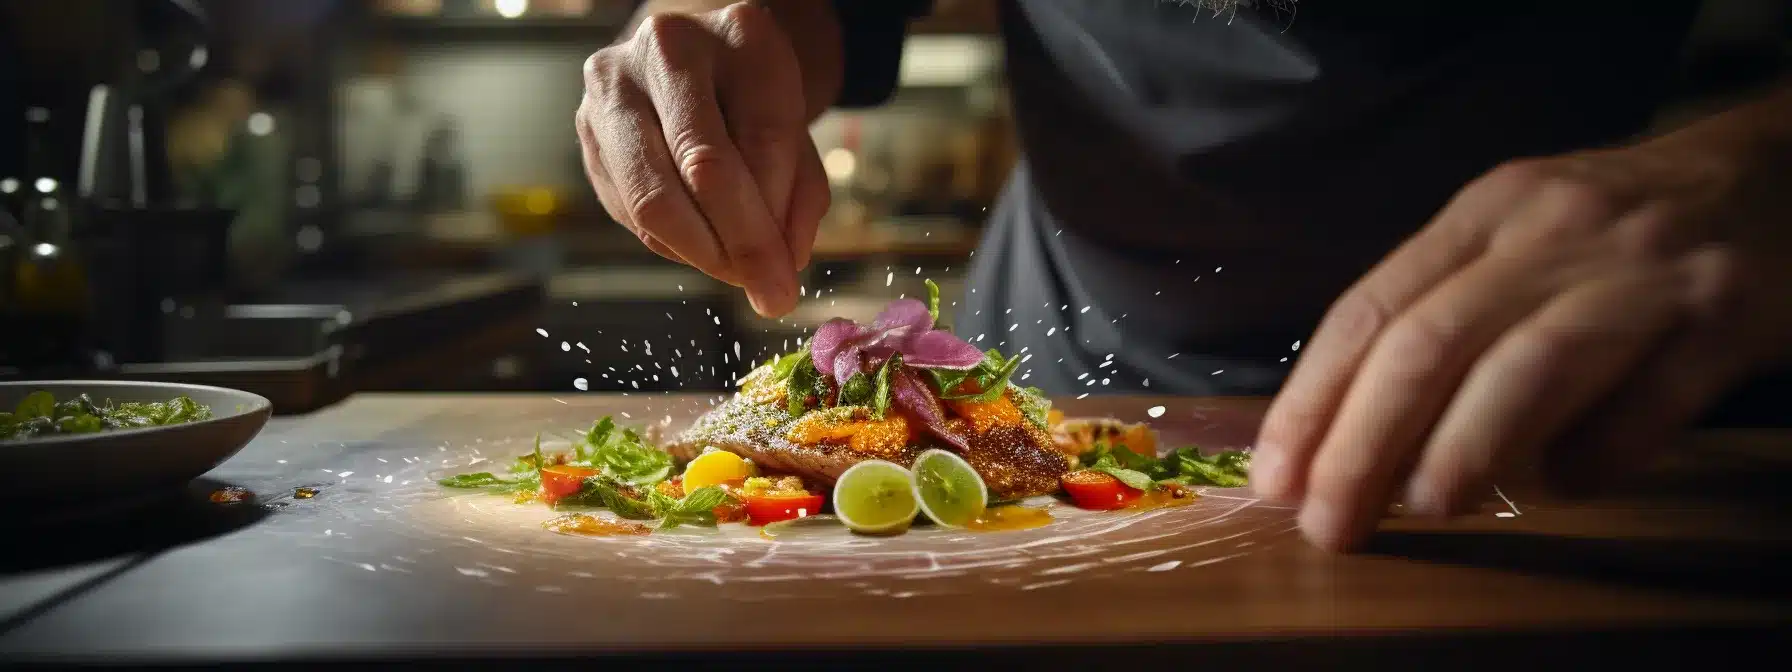 A Chef Adding A Secret Spice To A Dish On A Restaurant Menu.